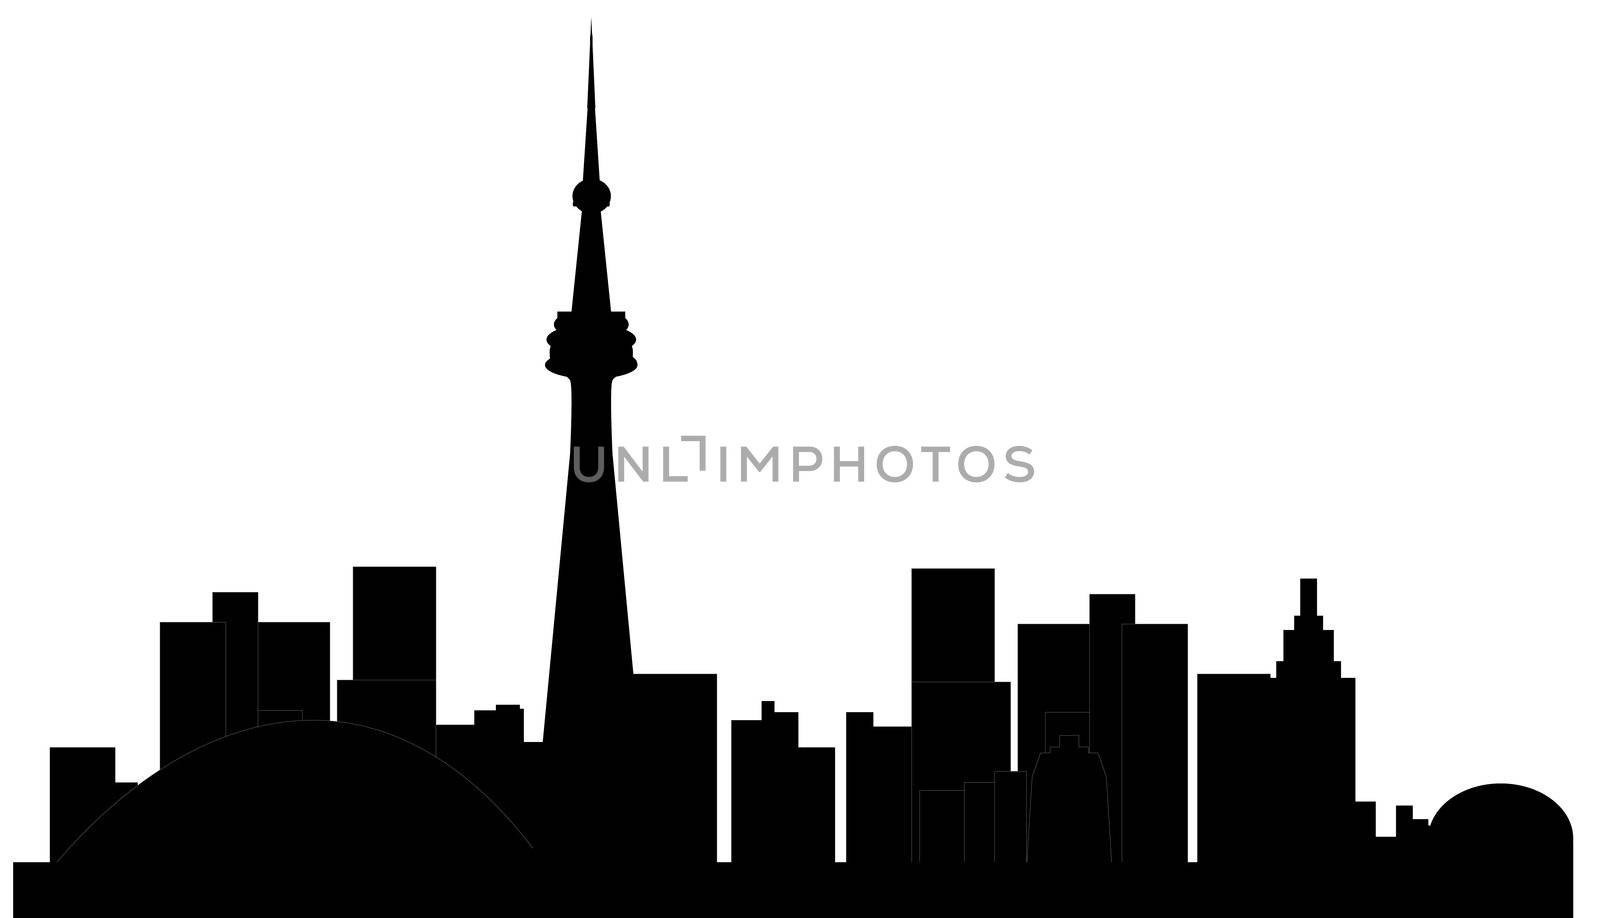 Toronto canada skyline